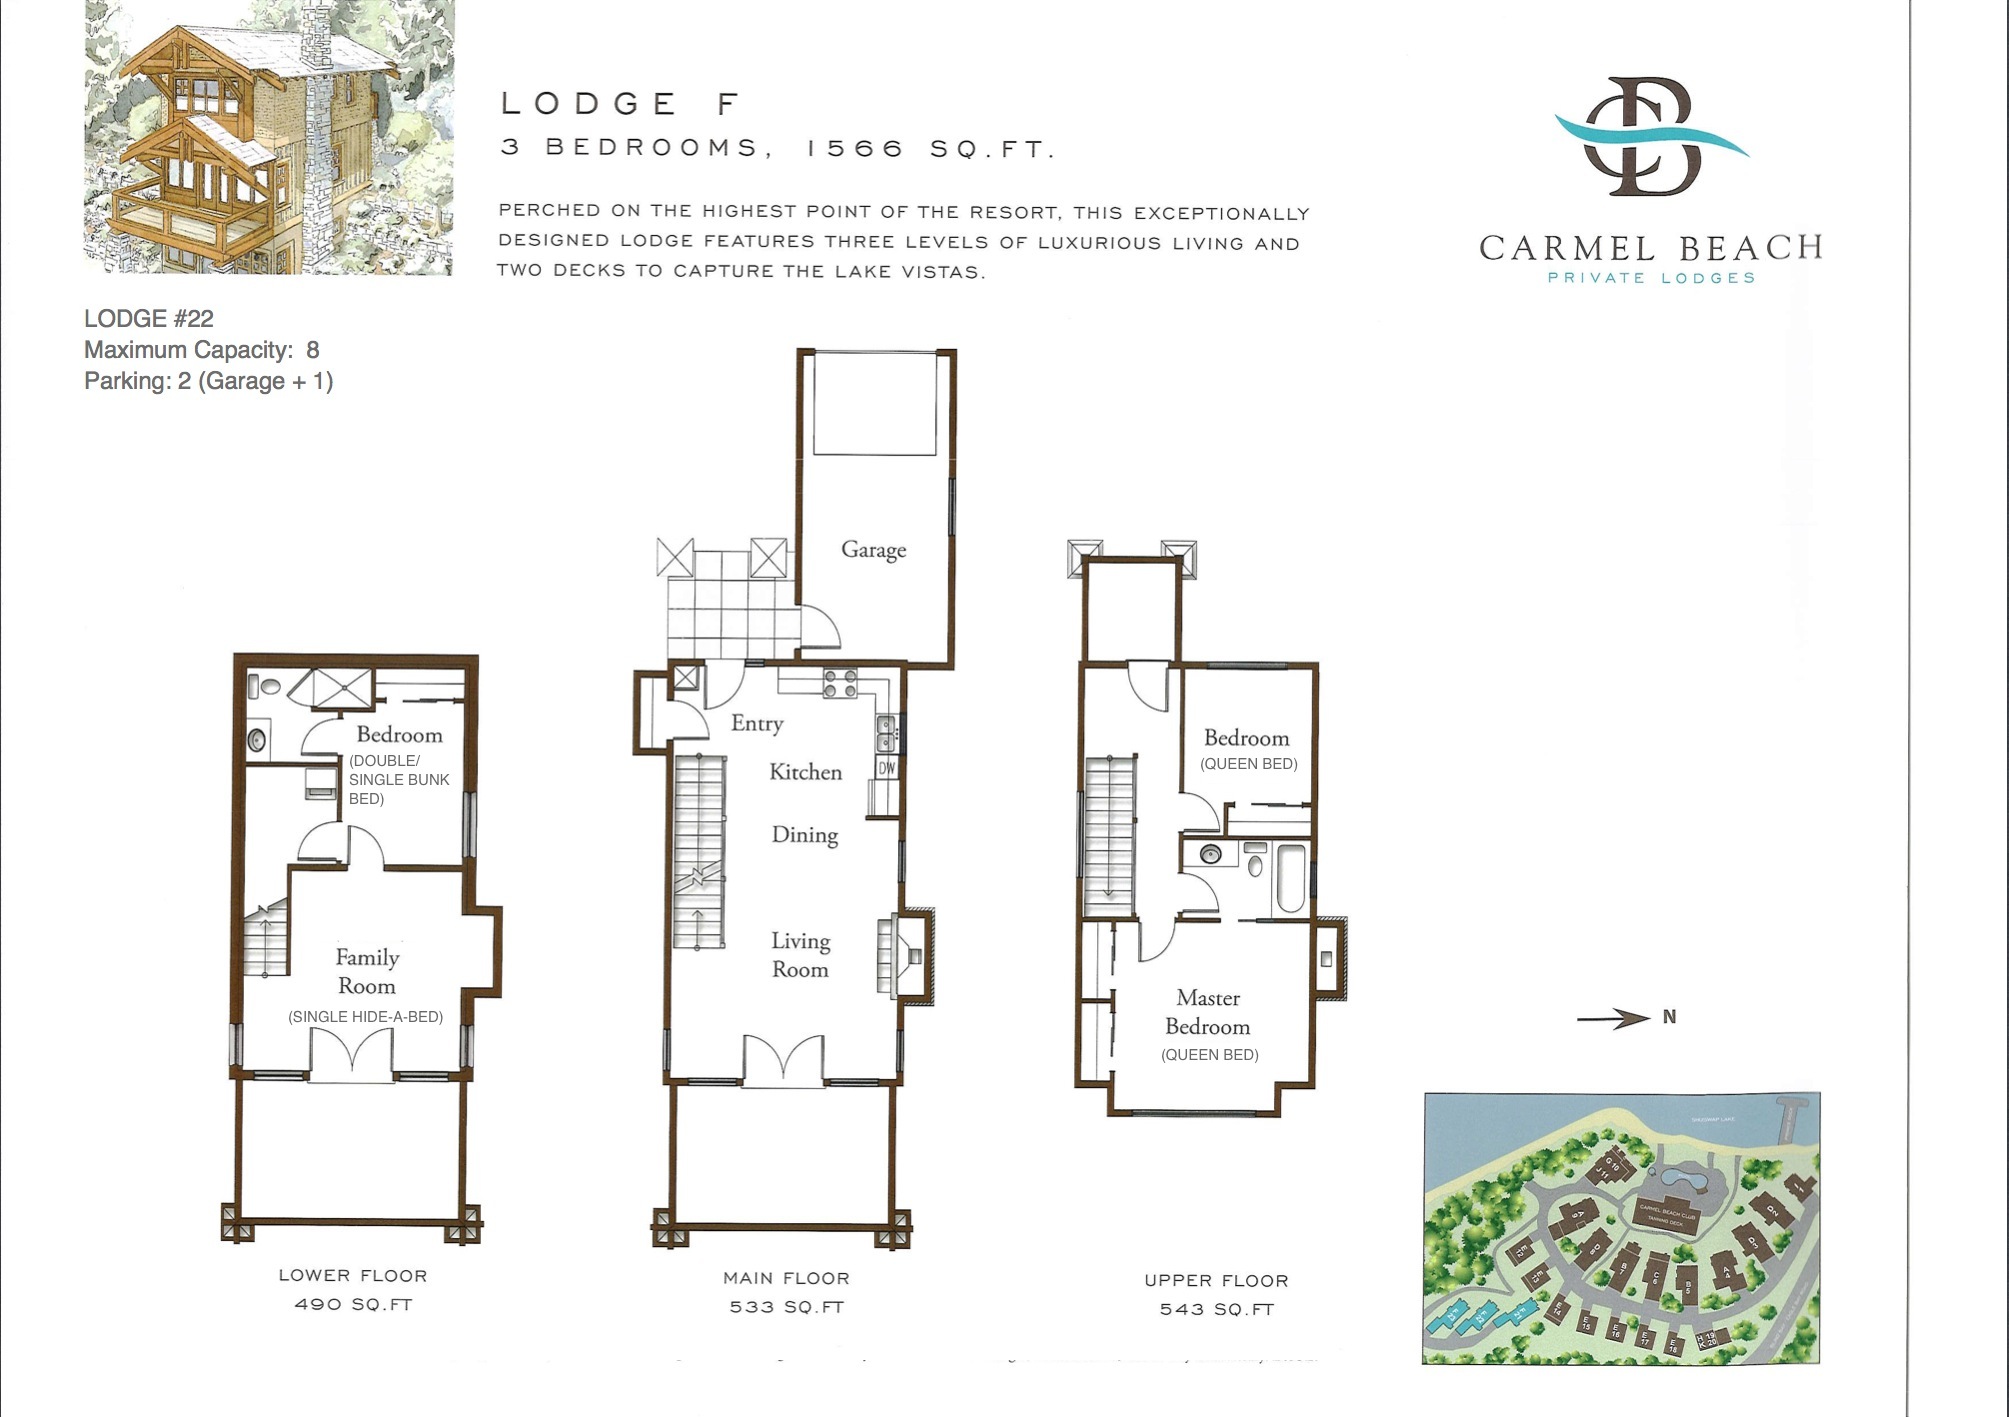 Lodge 22 Floor Plan & Bedding Configuration